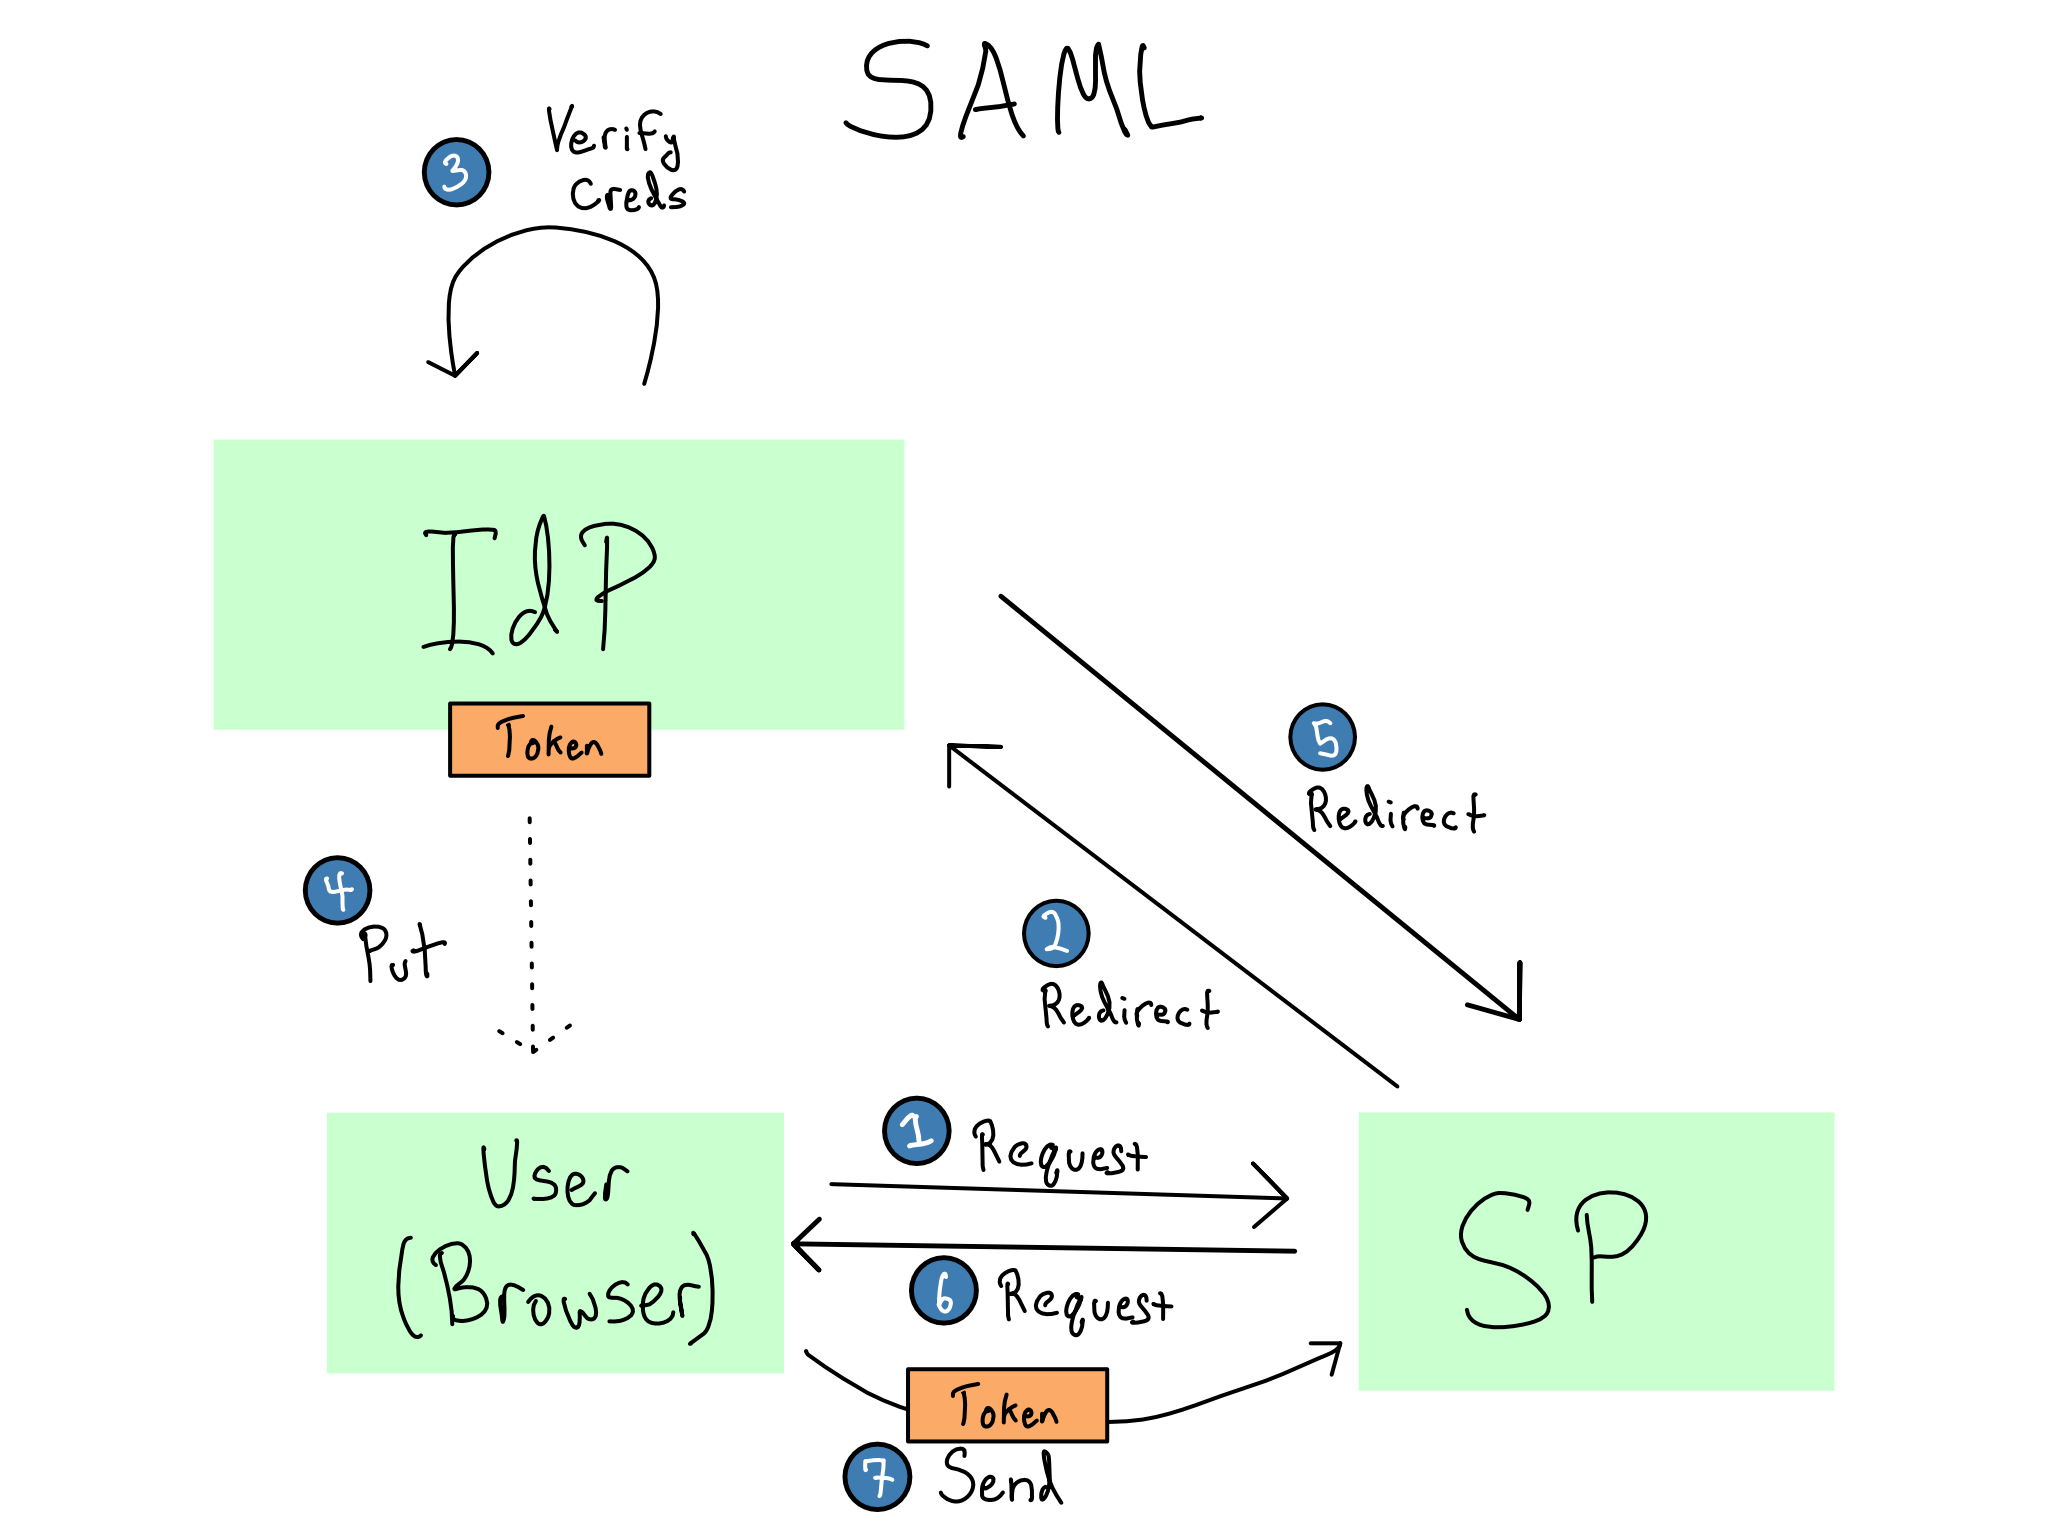 A visual representation of SAML auth flow as described above.